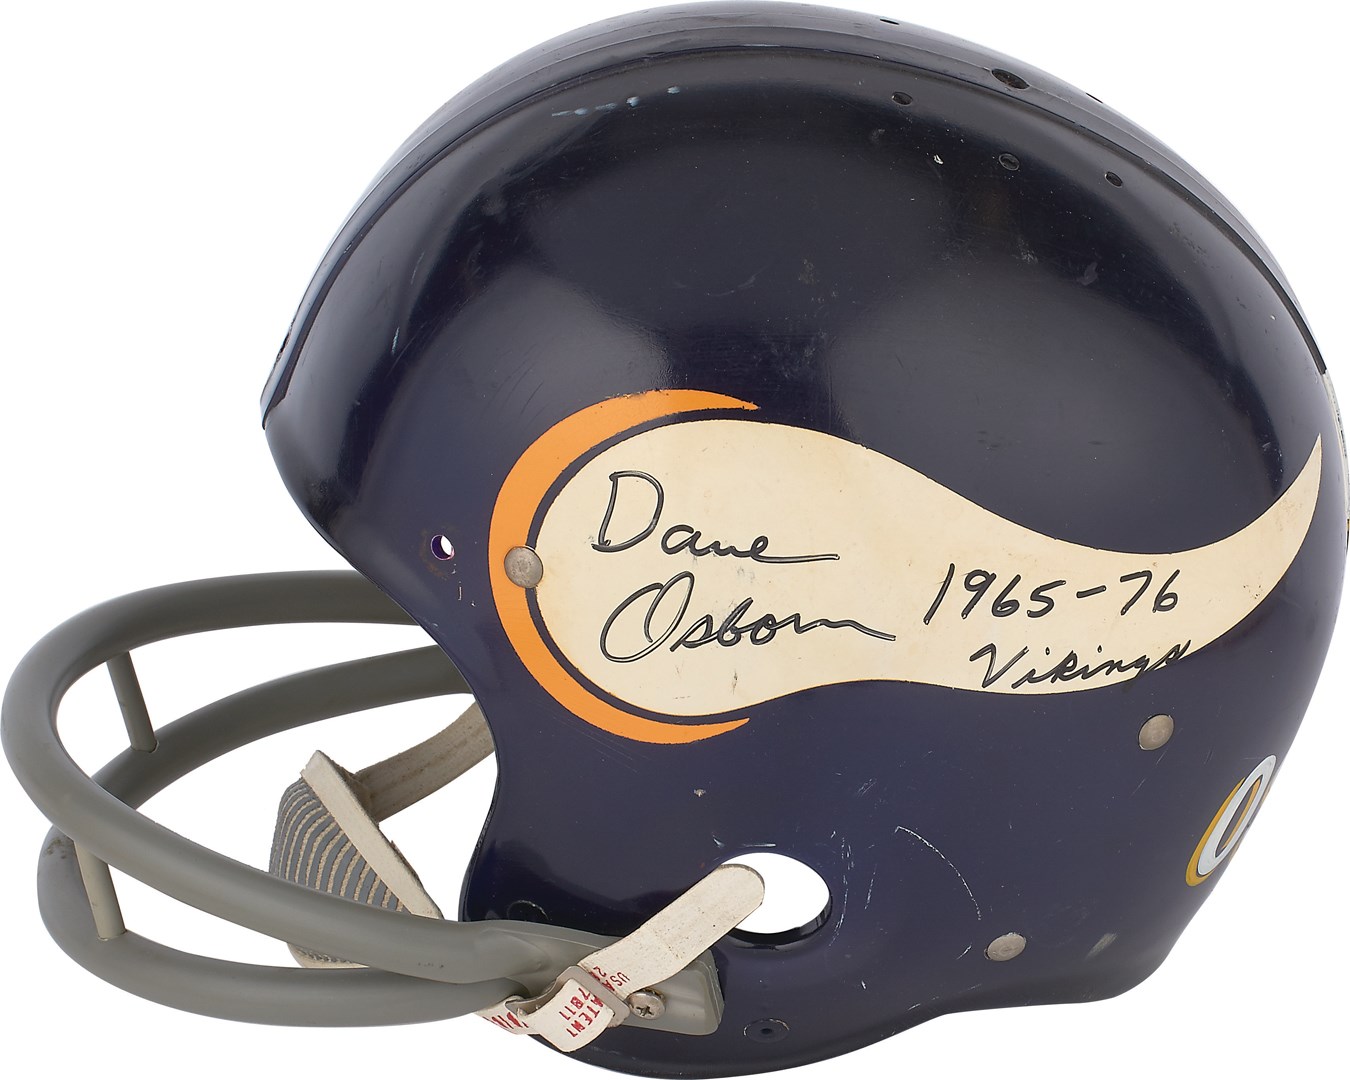 Dave Osborn Minnesota Vikings Signed Game Worn Helmet (Osborn Letter)